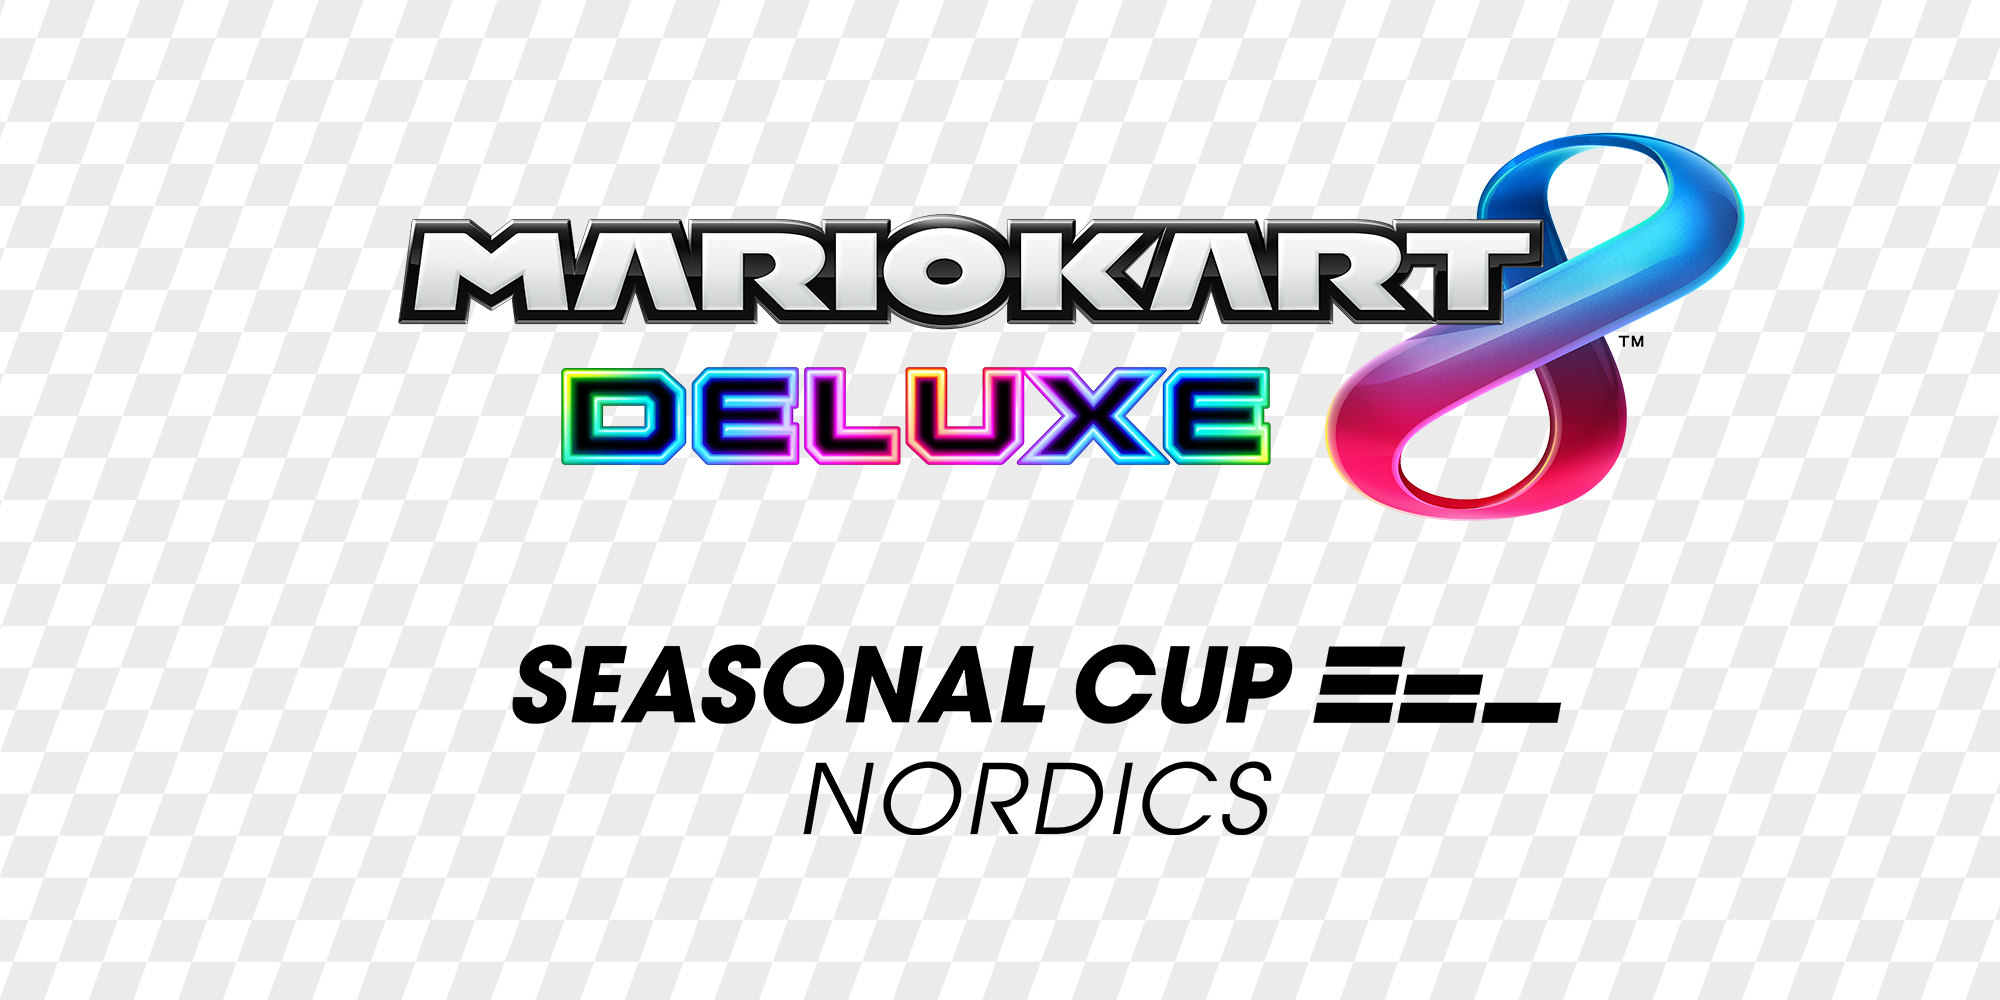 Mario Kart 8 Deluxe - Seasonal Cup - Nordics - Summer